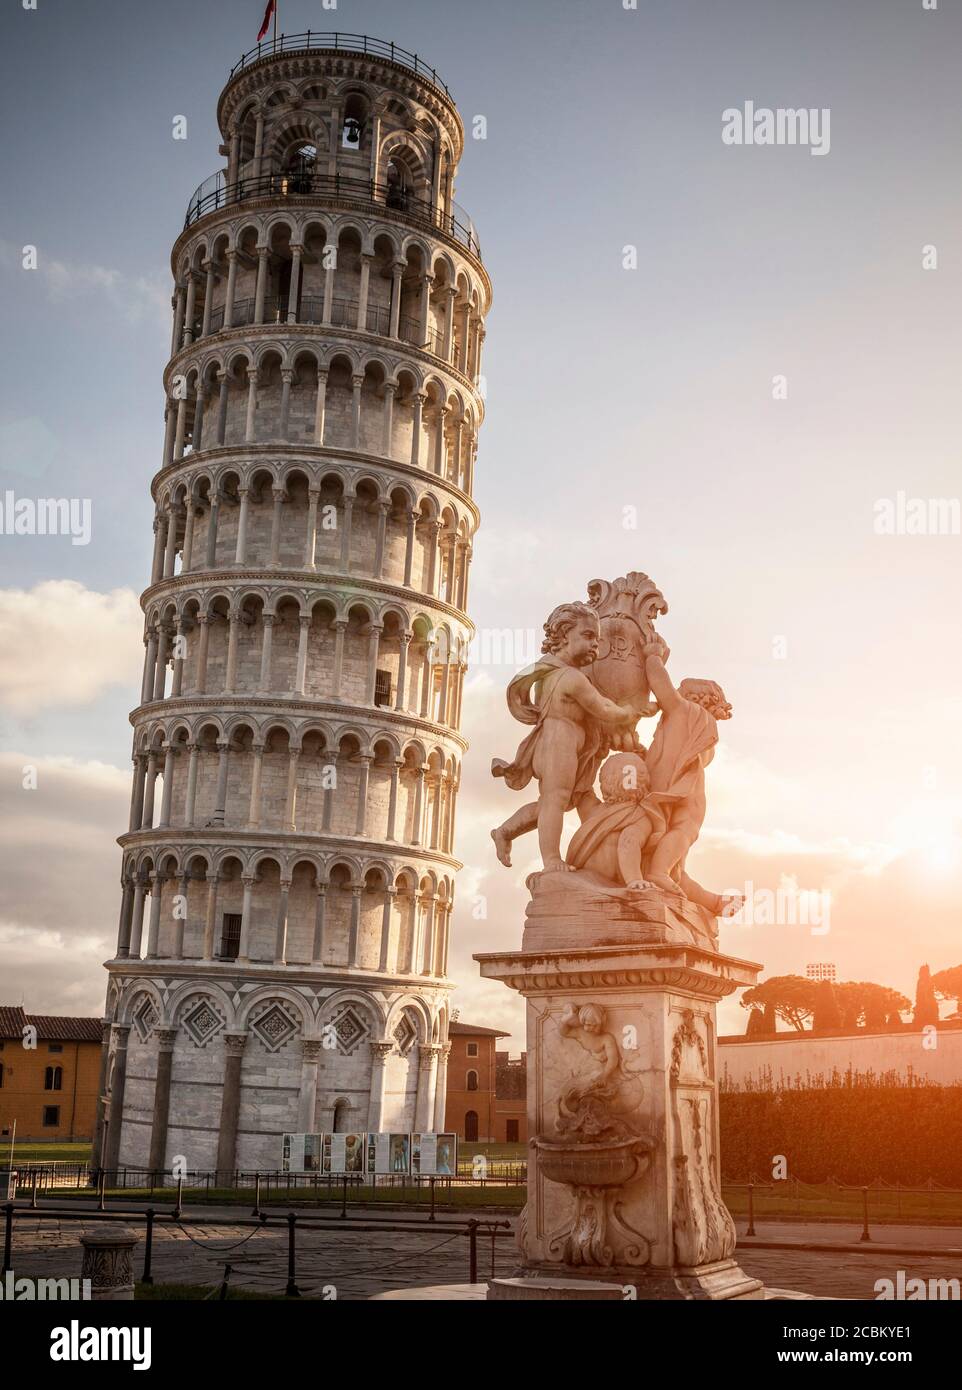 Torre Pendente di Pisa e statua, Pisa, Toscana, Italia Foto Stock